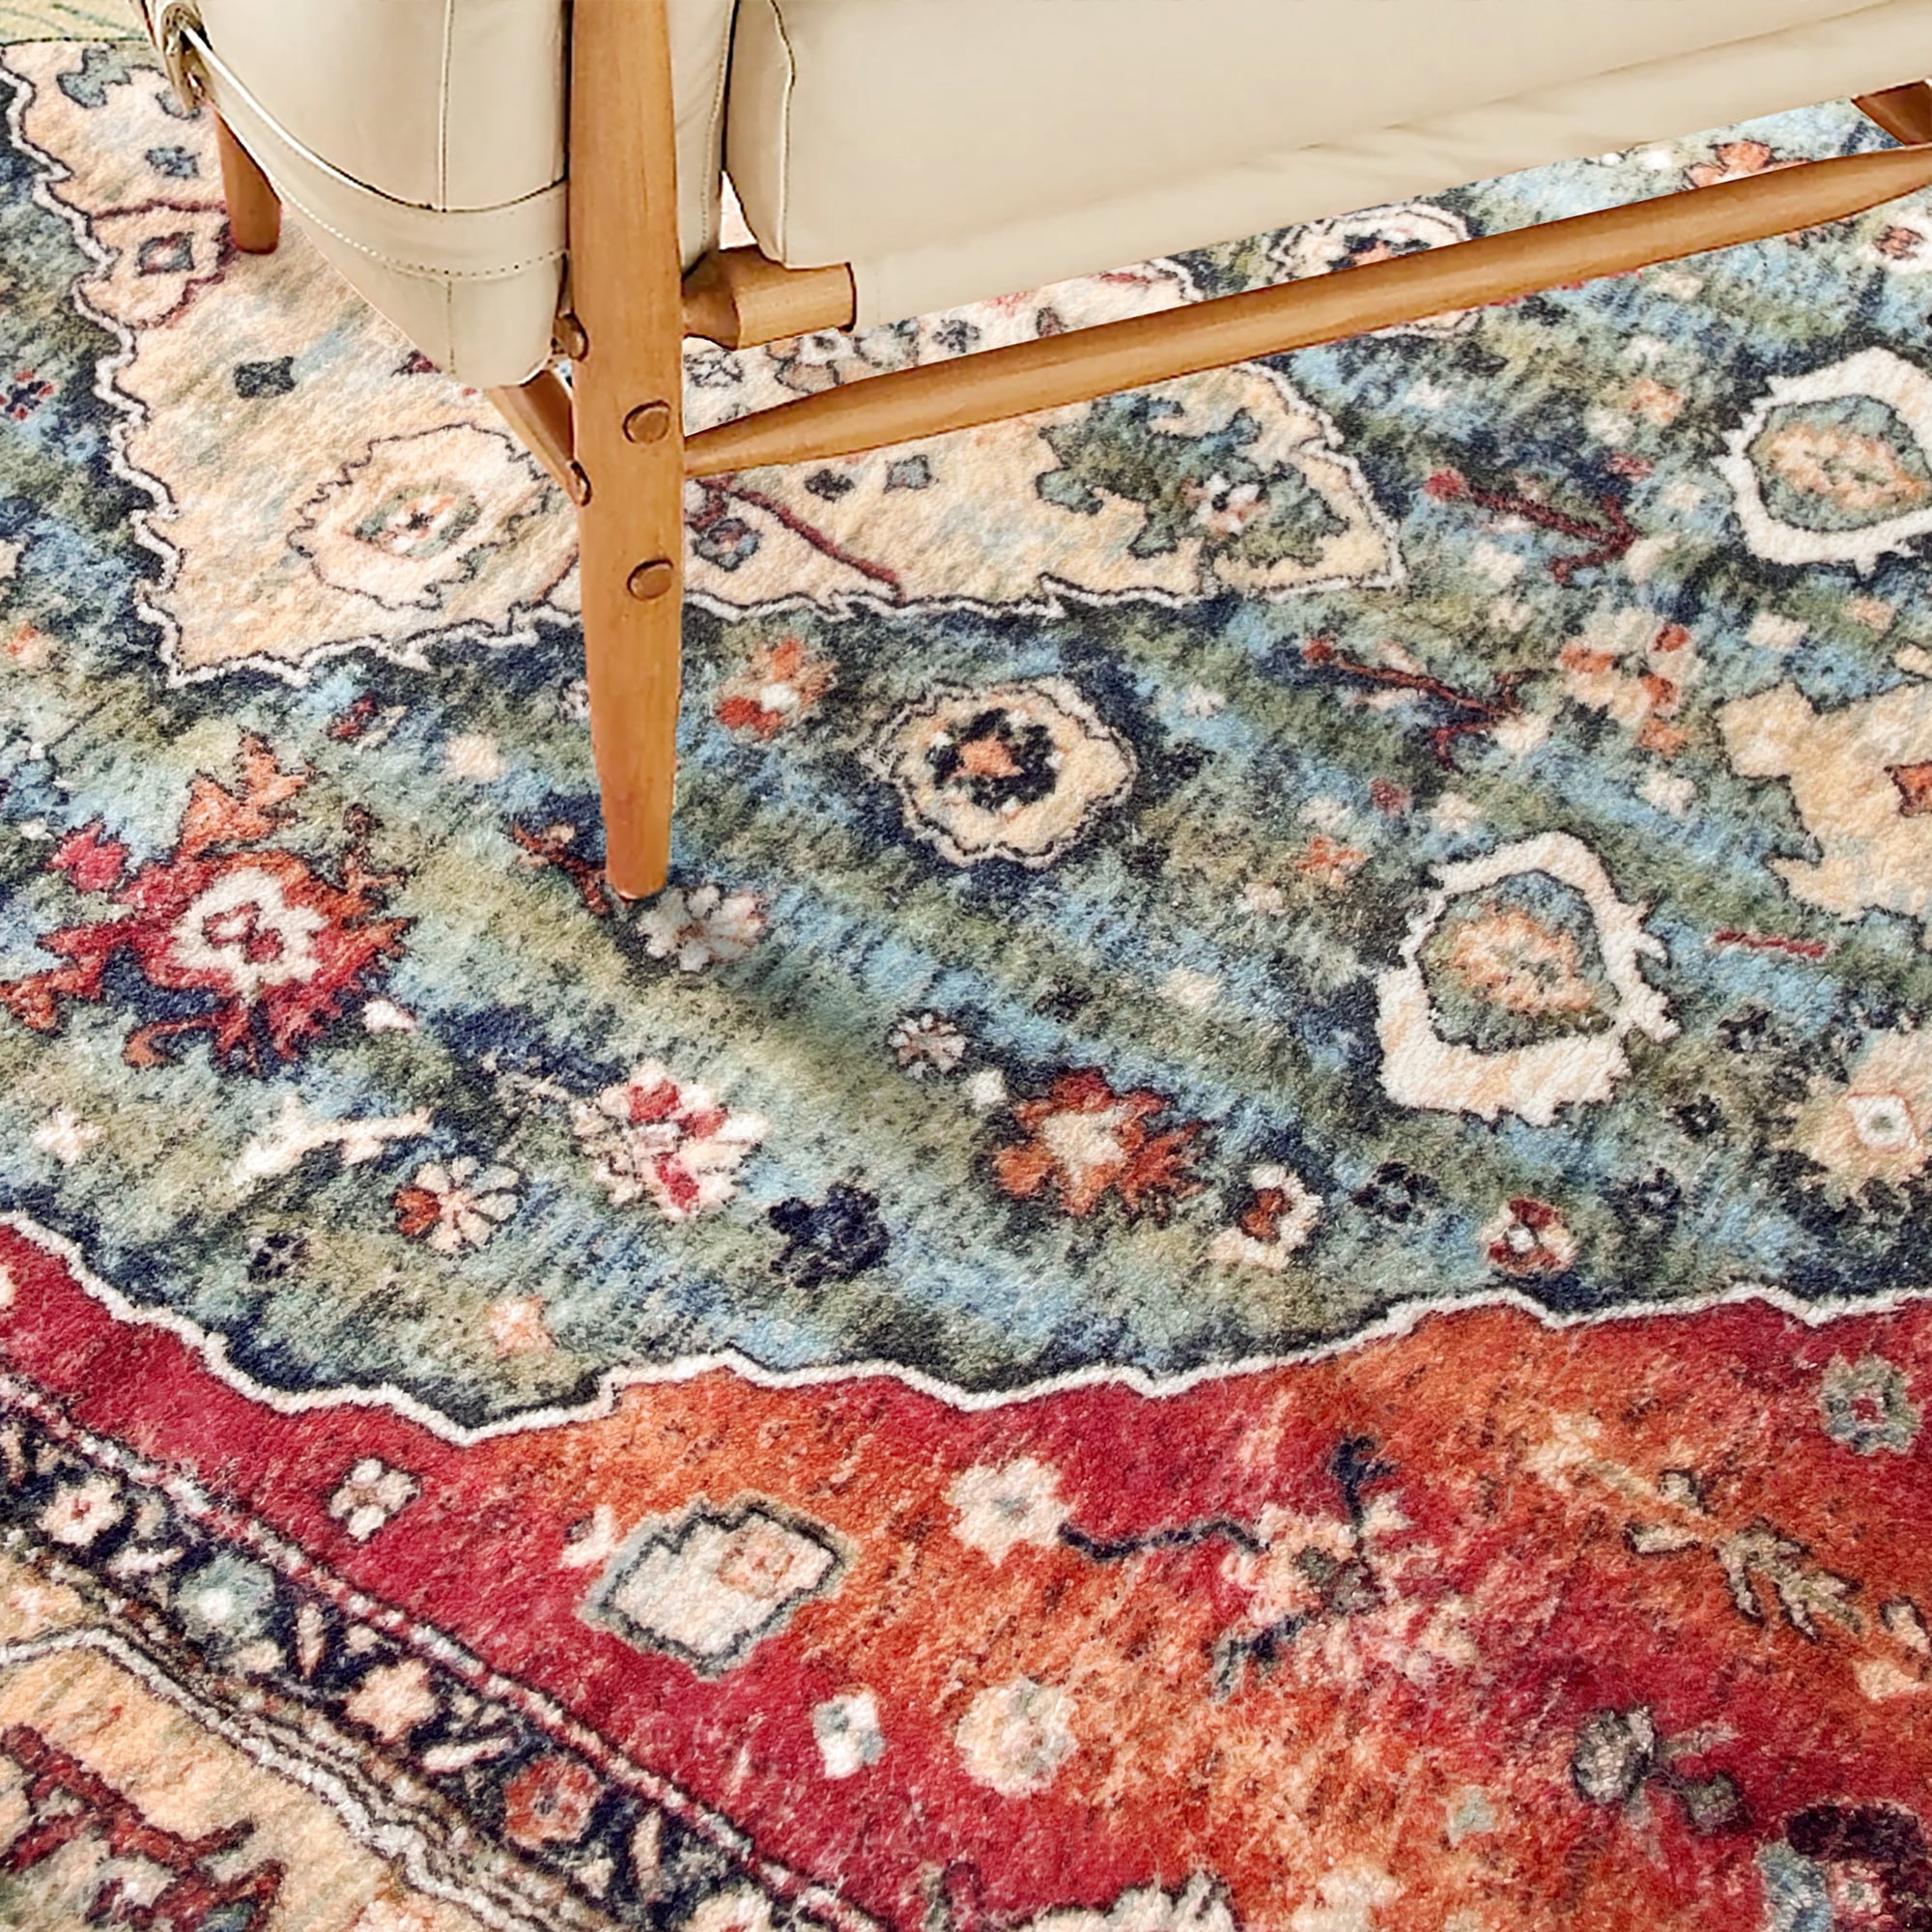  IOHOUZE Accent Rug, Boho Door Mat 2x3 Washable Entryway Rug,  Medal Vintage Faux Wool Non-Slip Low-Pile Floor Carpet for Hallway Indoor Front  Entrance : Home & Kitchen